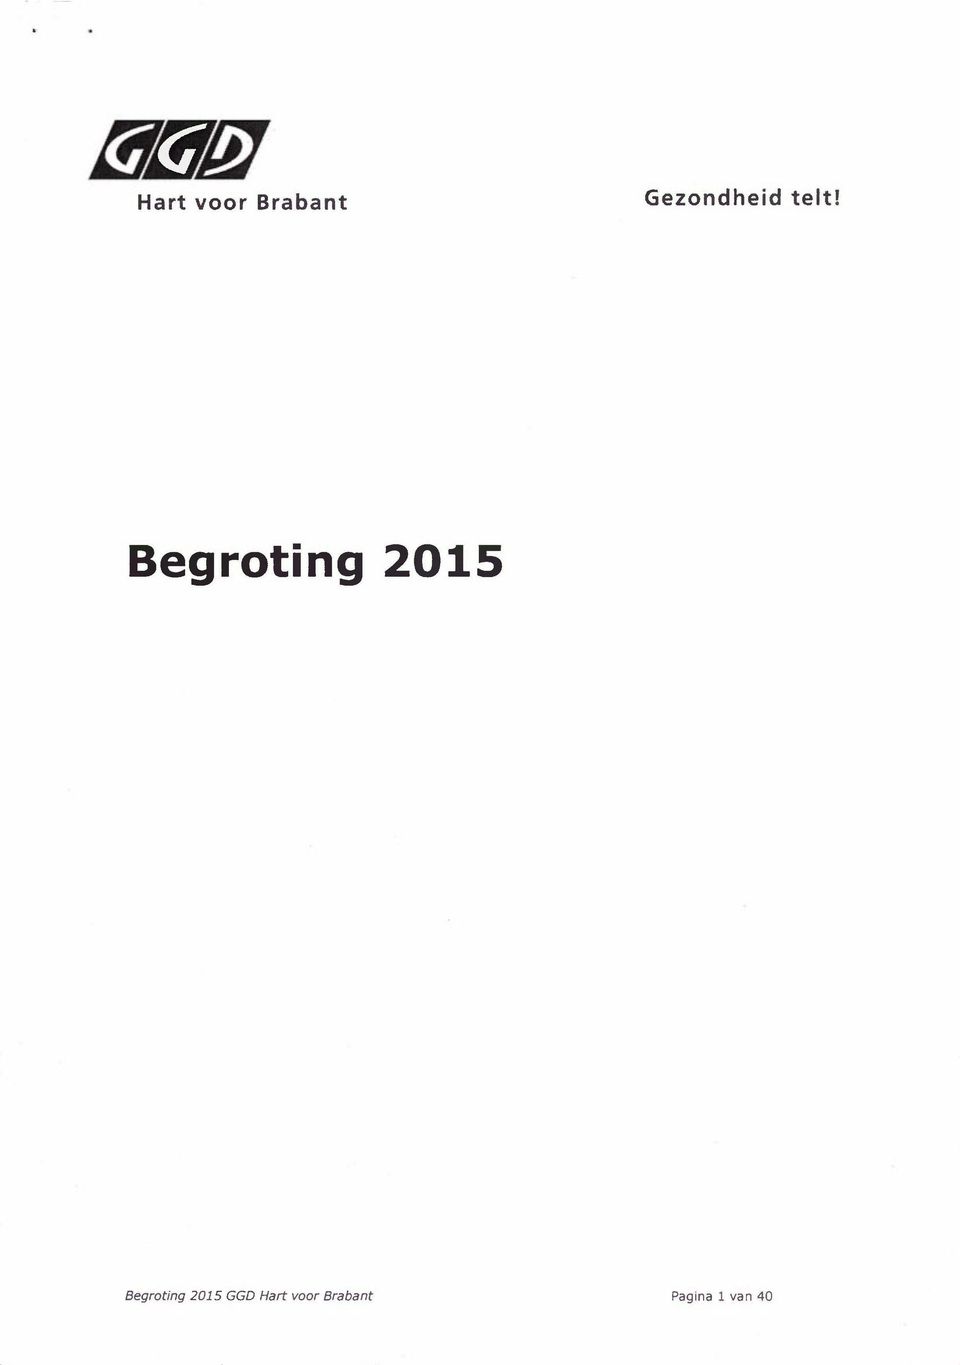 Begroting 2015 8egroting